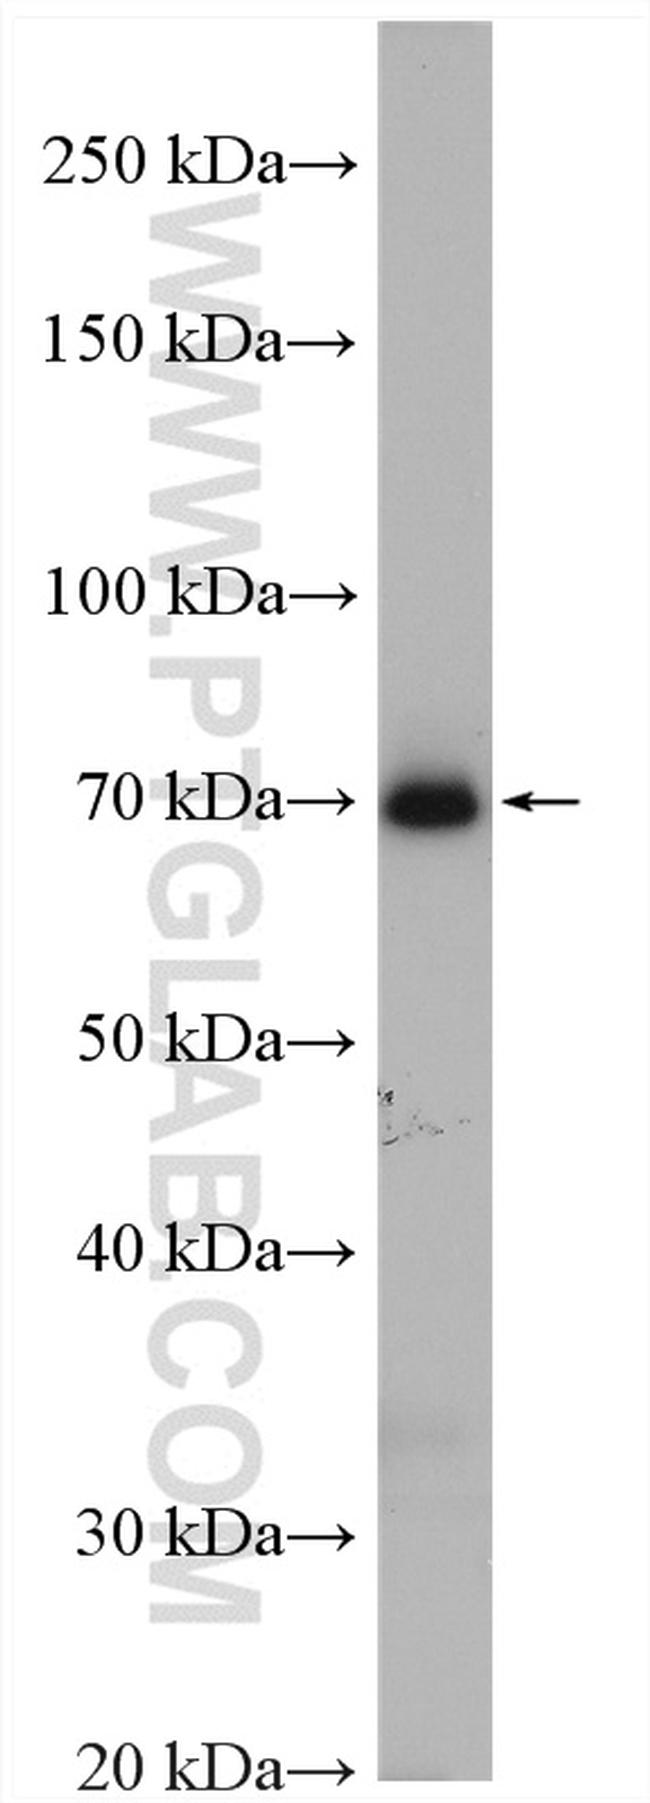 NXF1 Antibody in Western Blot (WB)